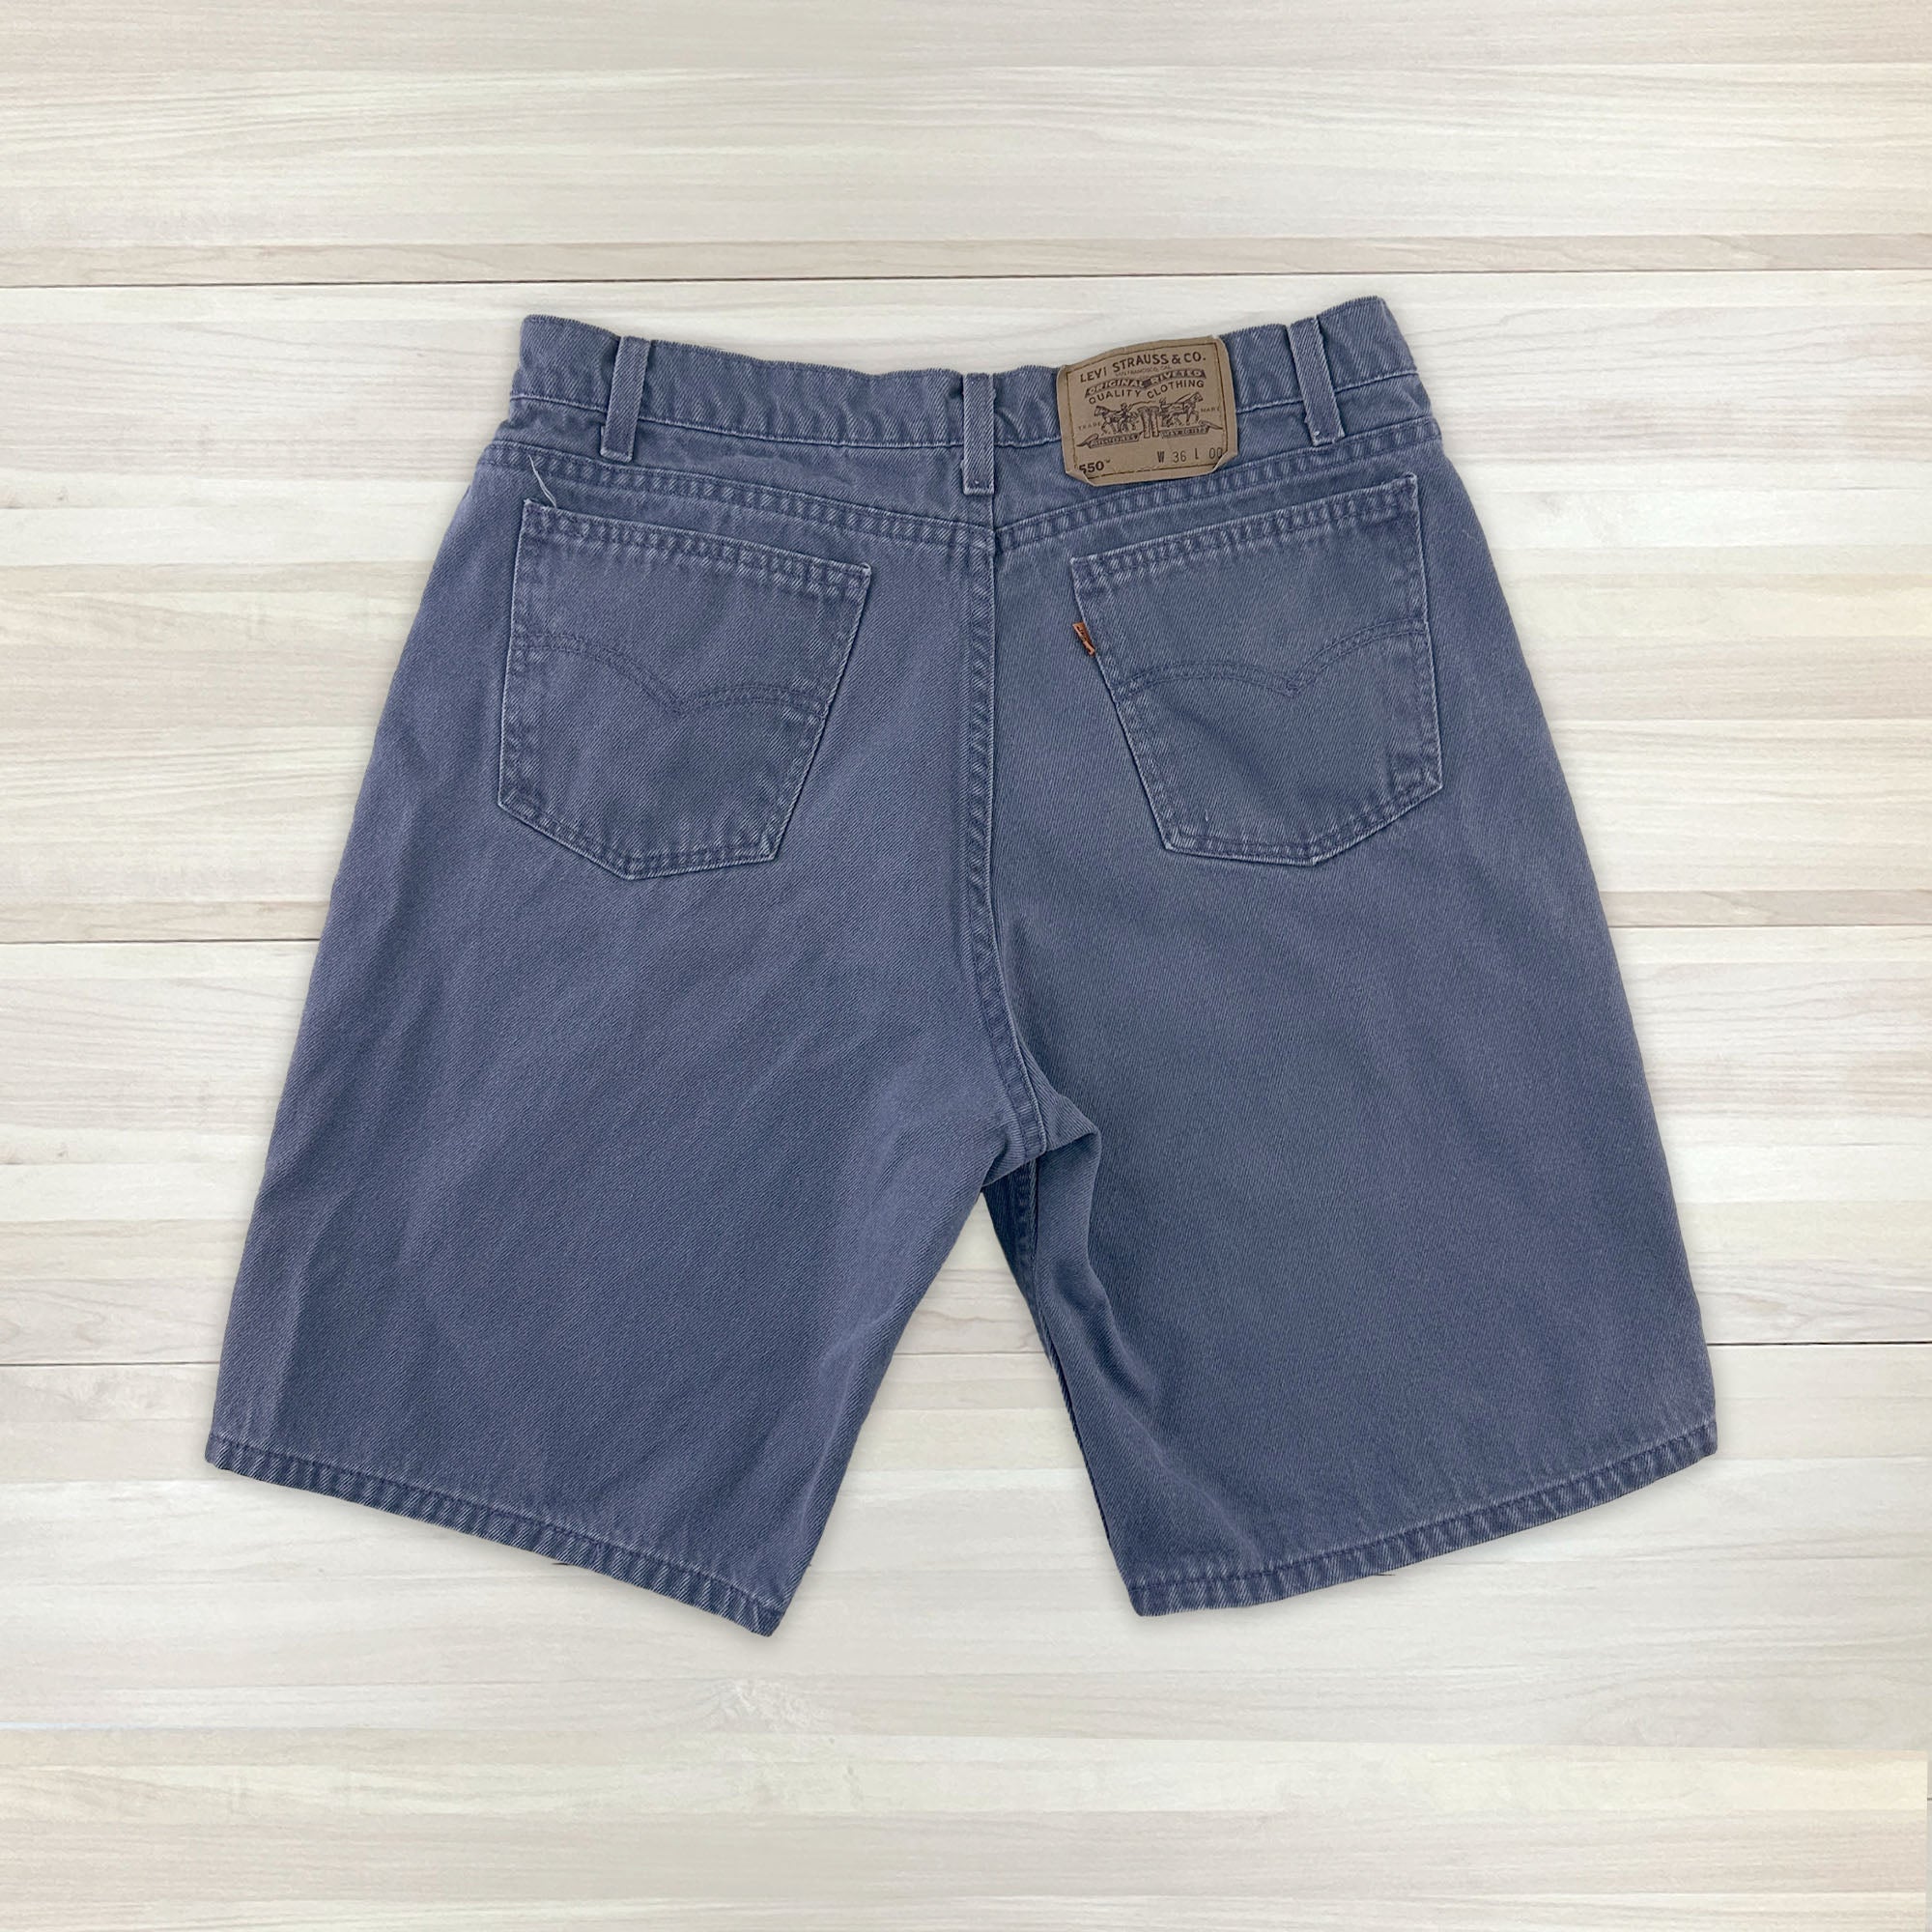 Men's Vintage Purple Levi's 550 Orange Tab Shorts - Measures 35x10-2